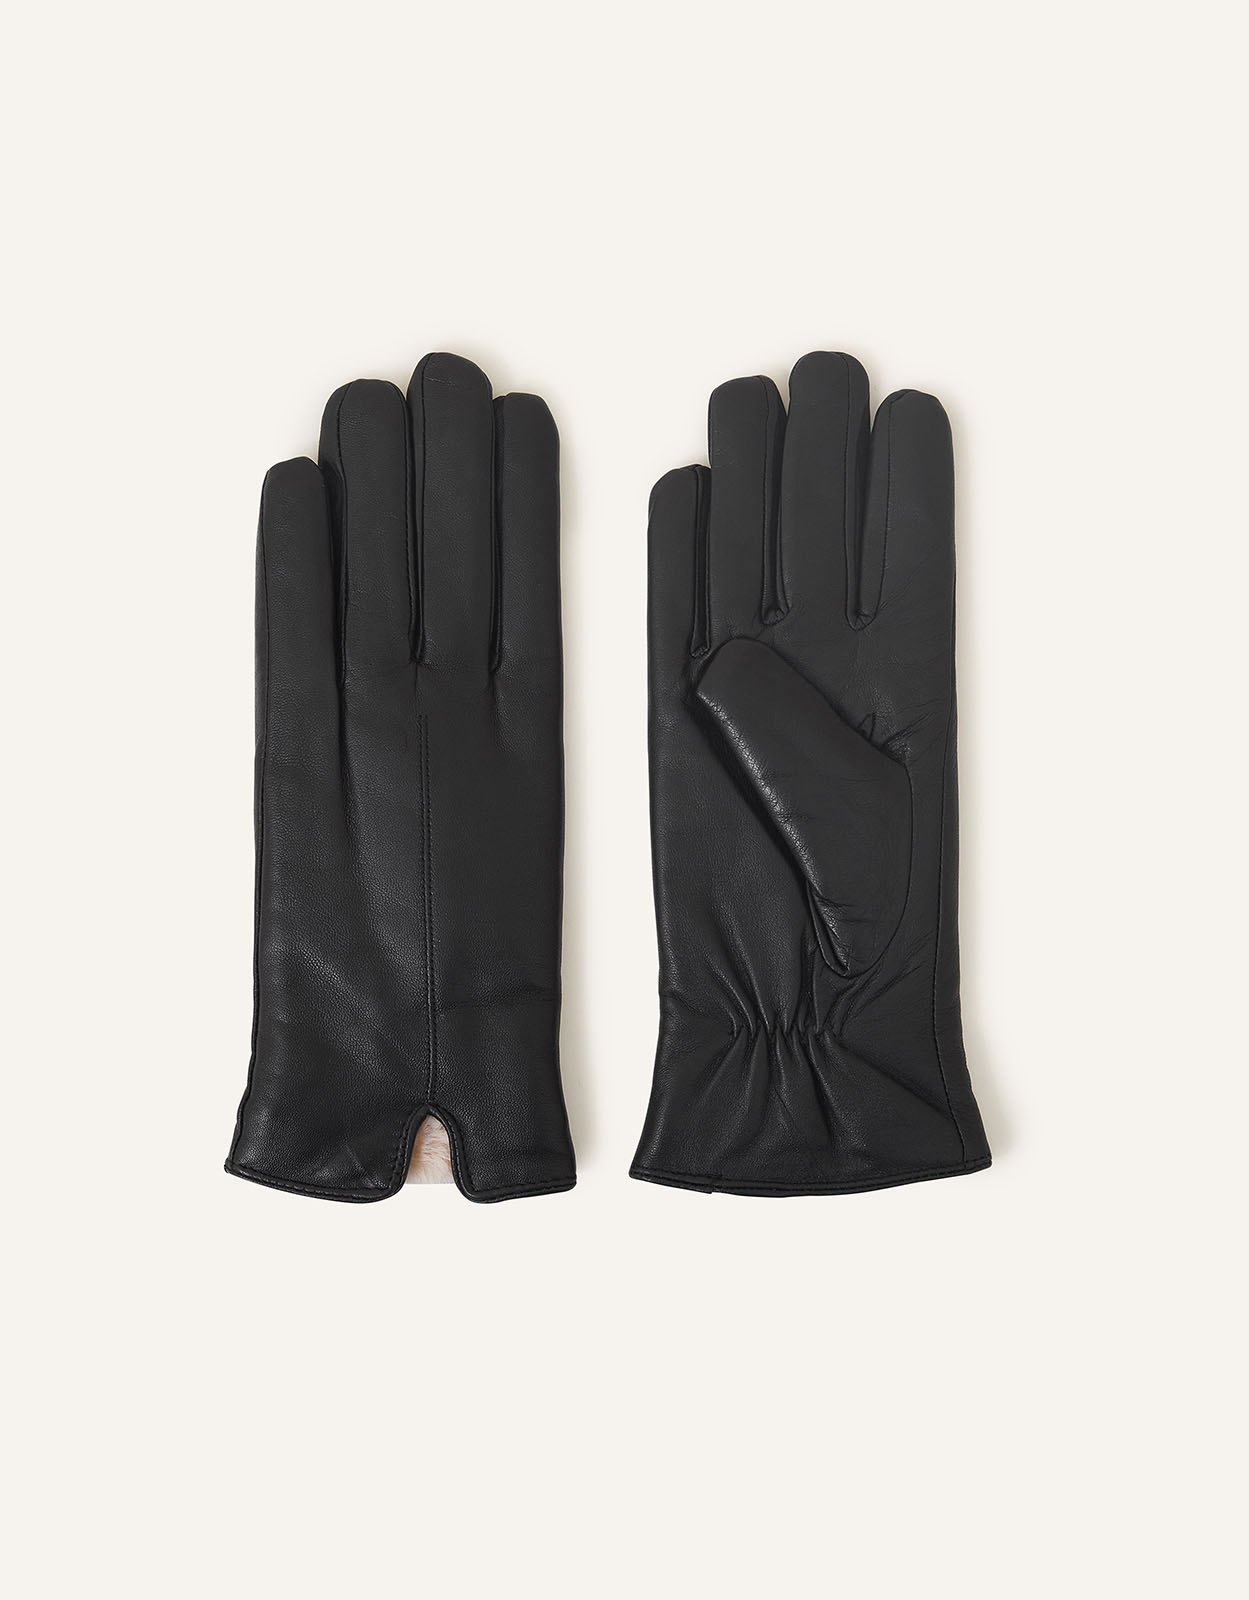 Accessorize Black Leather Faux Fur-Lined Gloves, Size: M / L